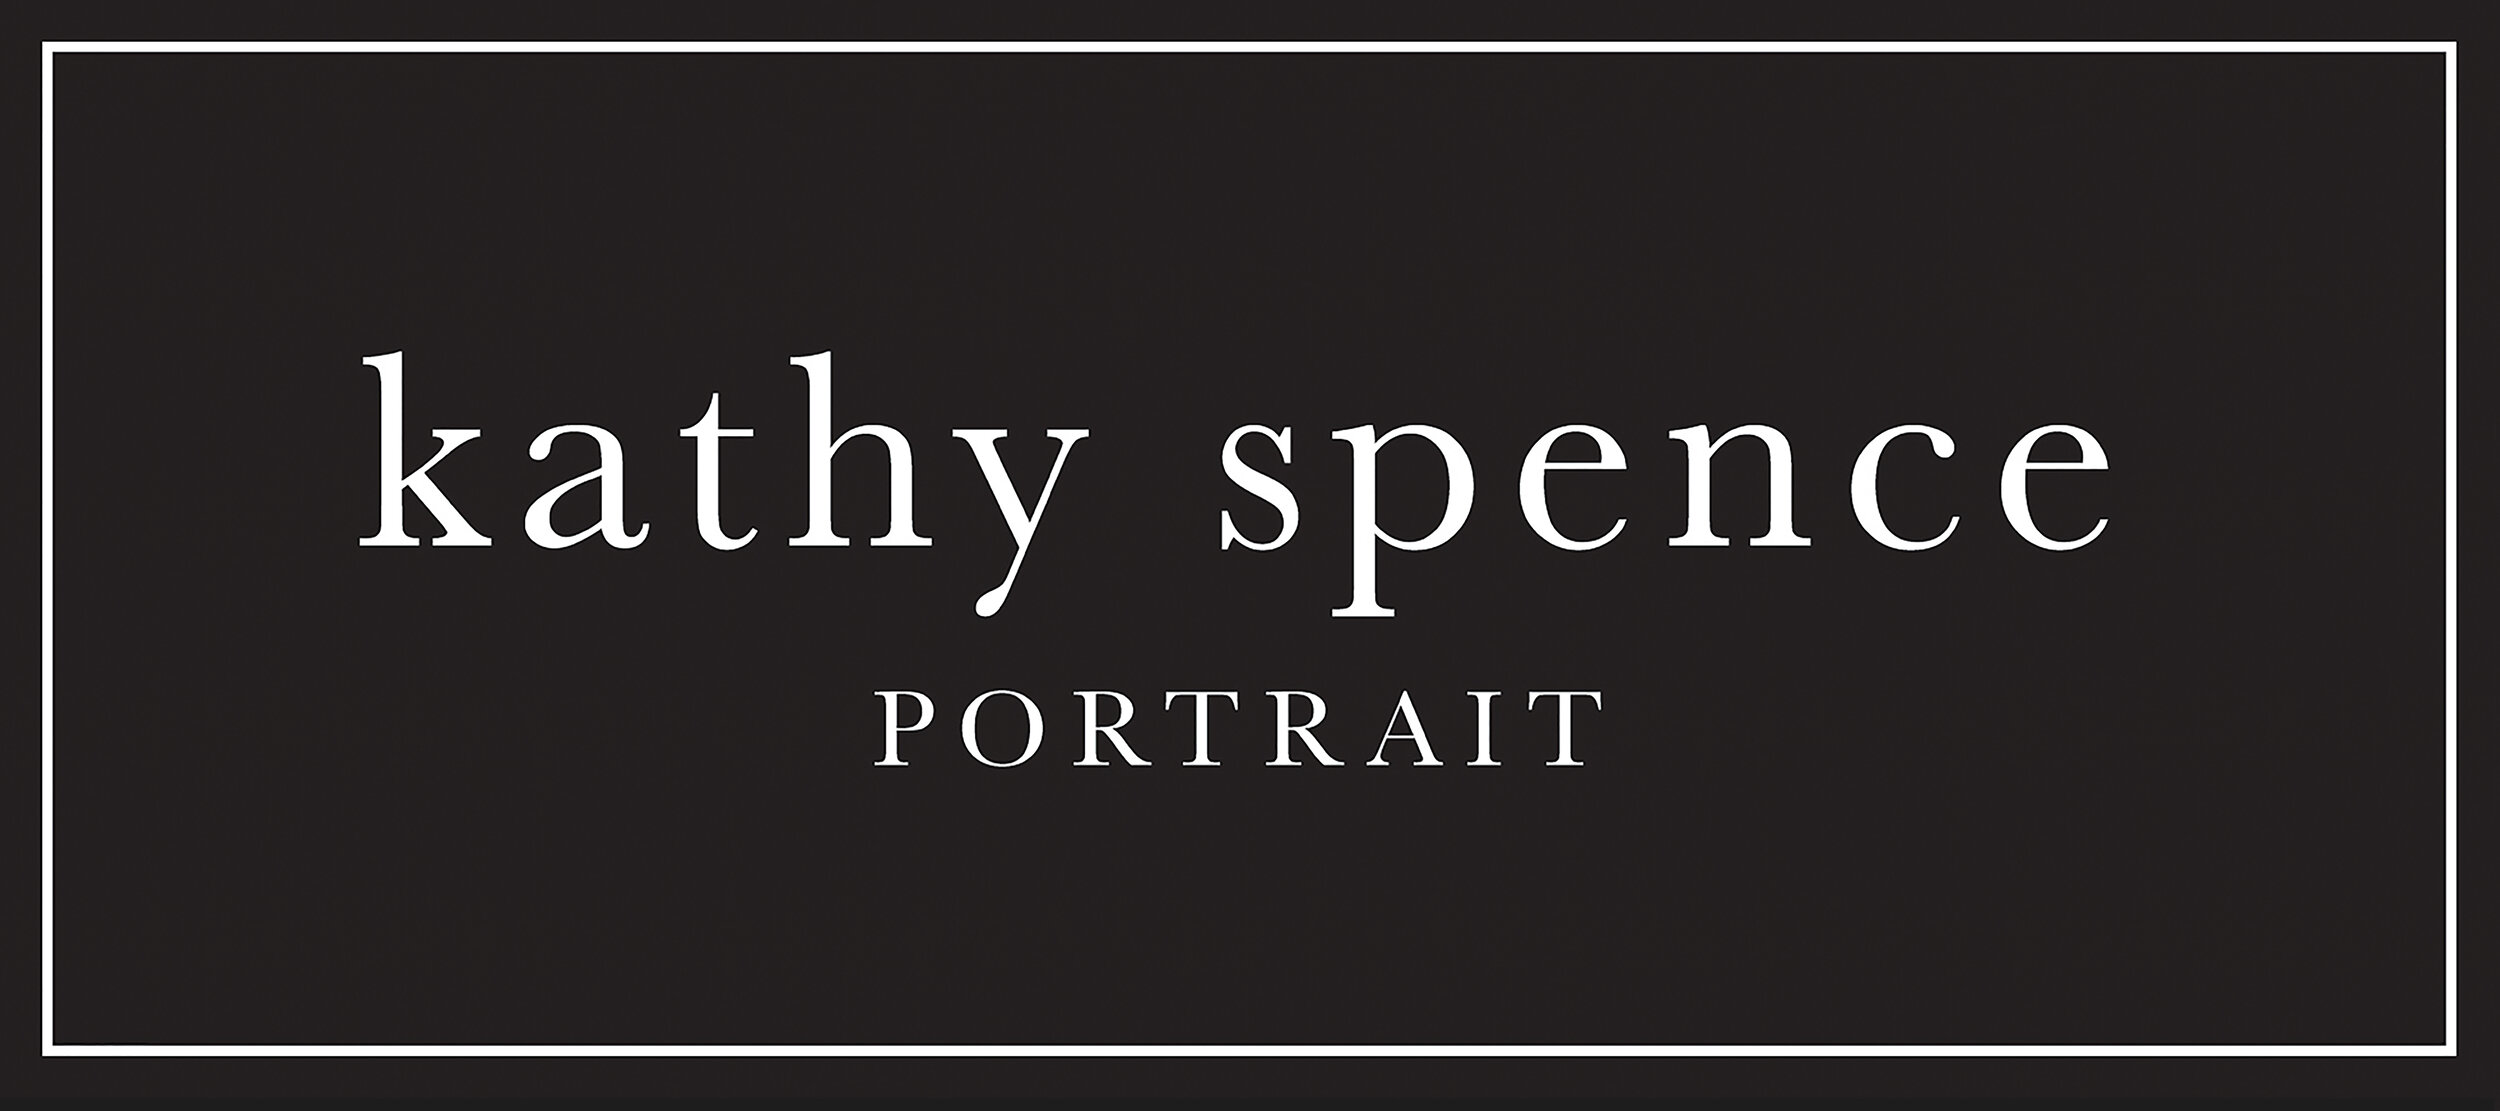 kathy spence portrait